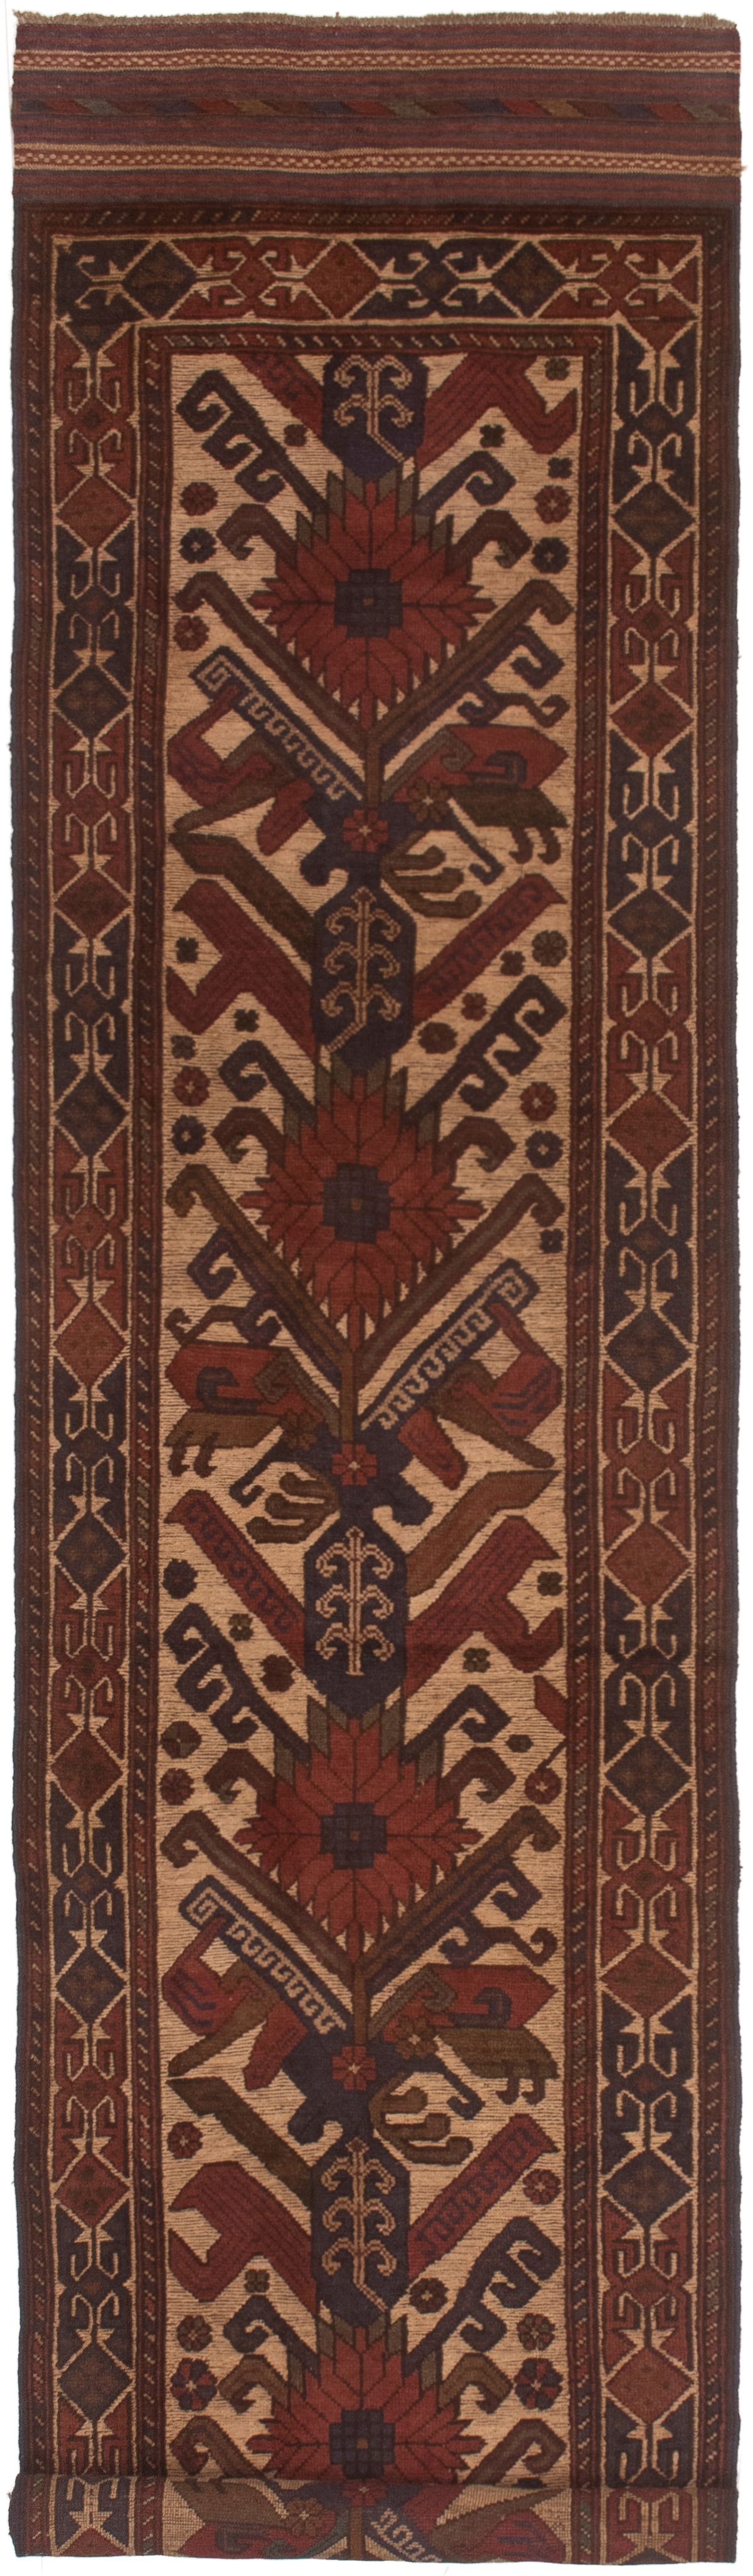 Hand-knotted Tajik Caucasian Cream, Red Wool Rug 2'6" x 12'1" Size: 2'6" x 12'1"  